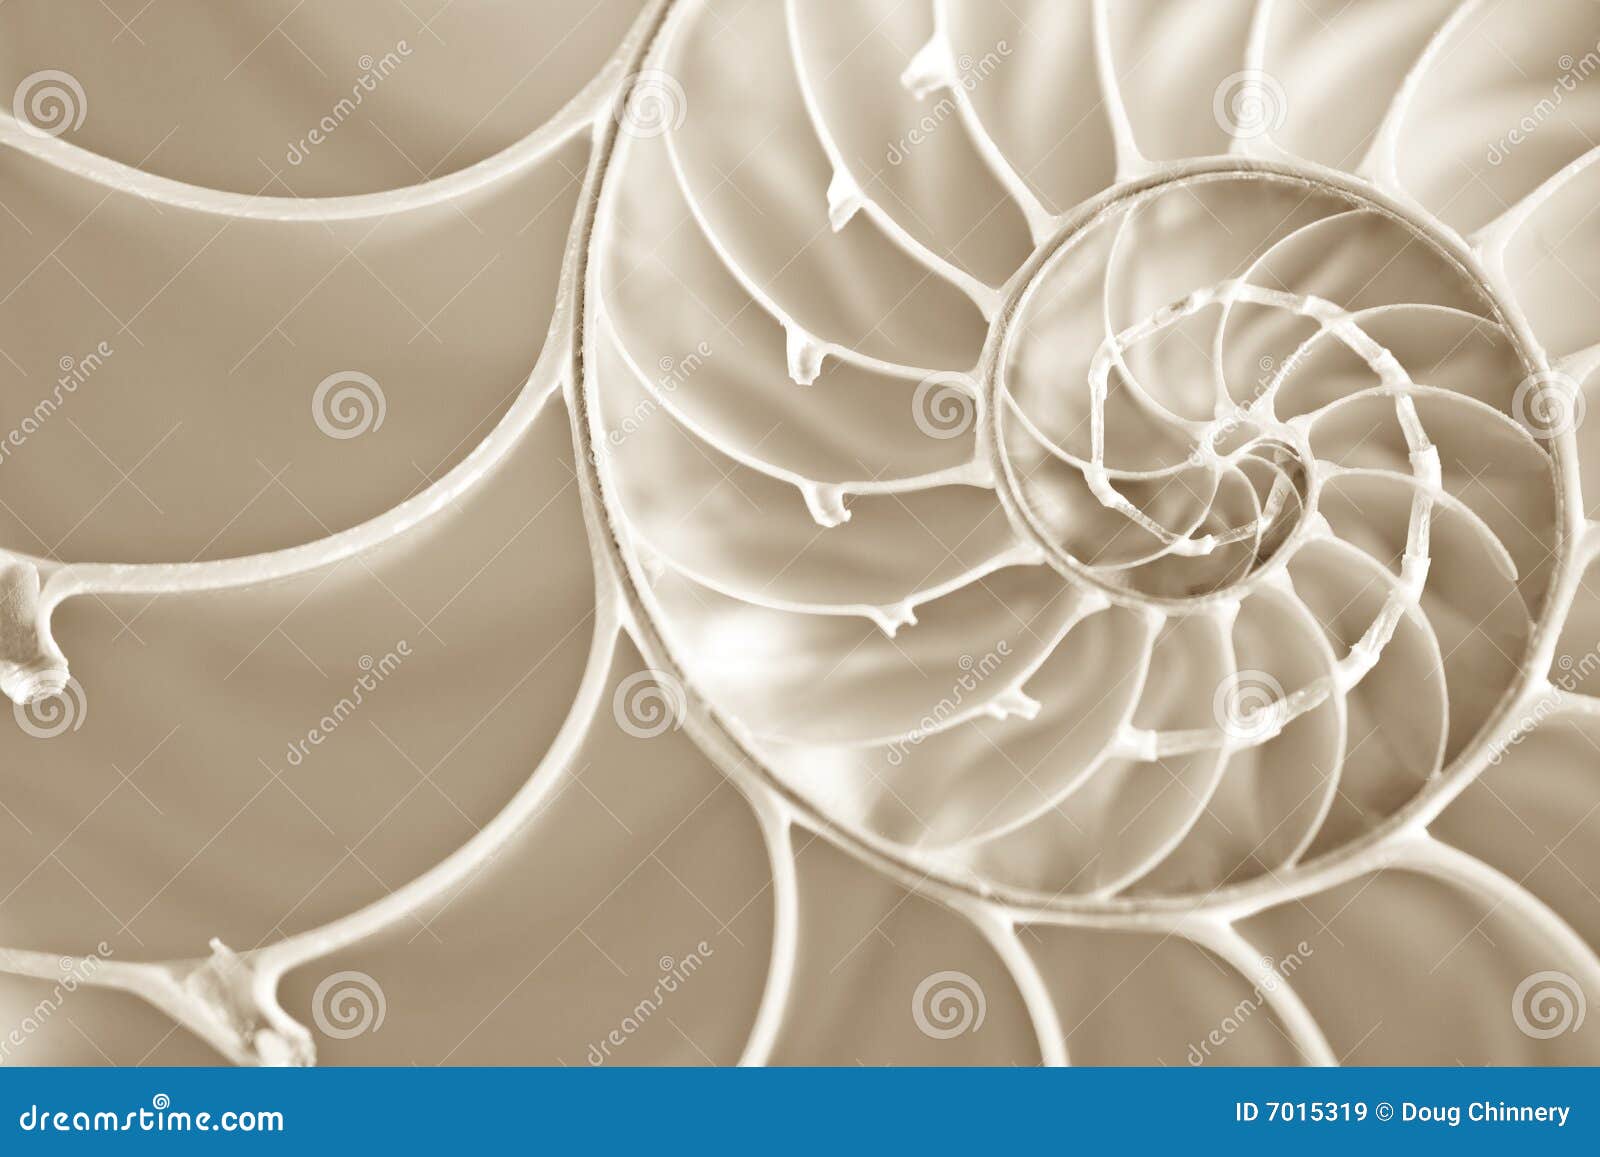 fibbonachi spiral in nautilus shell